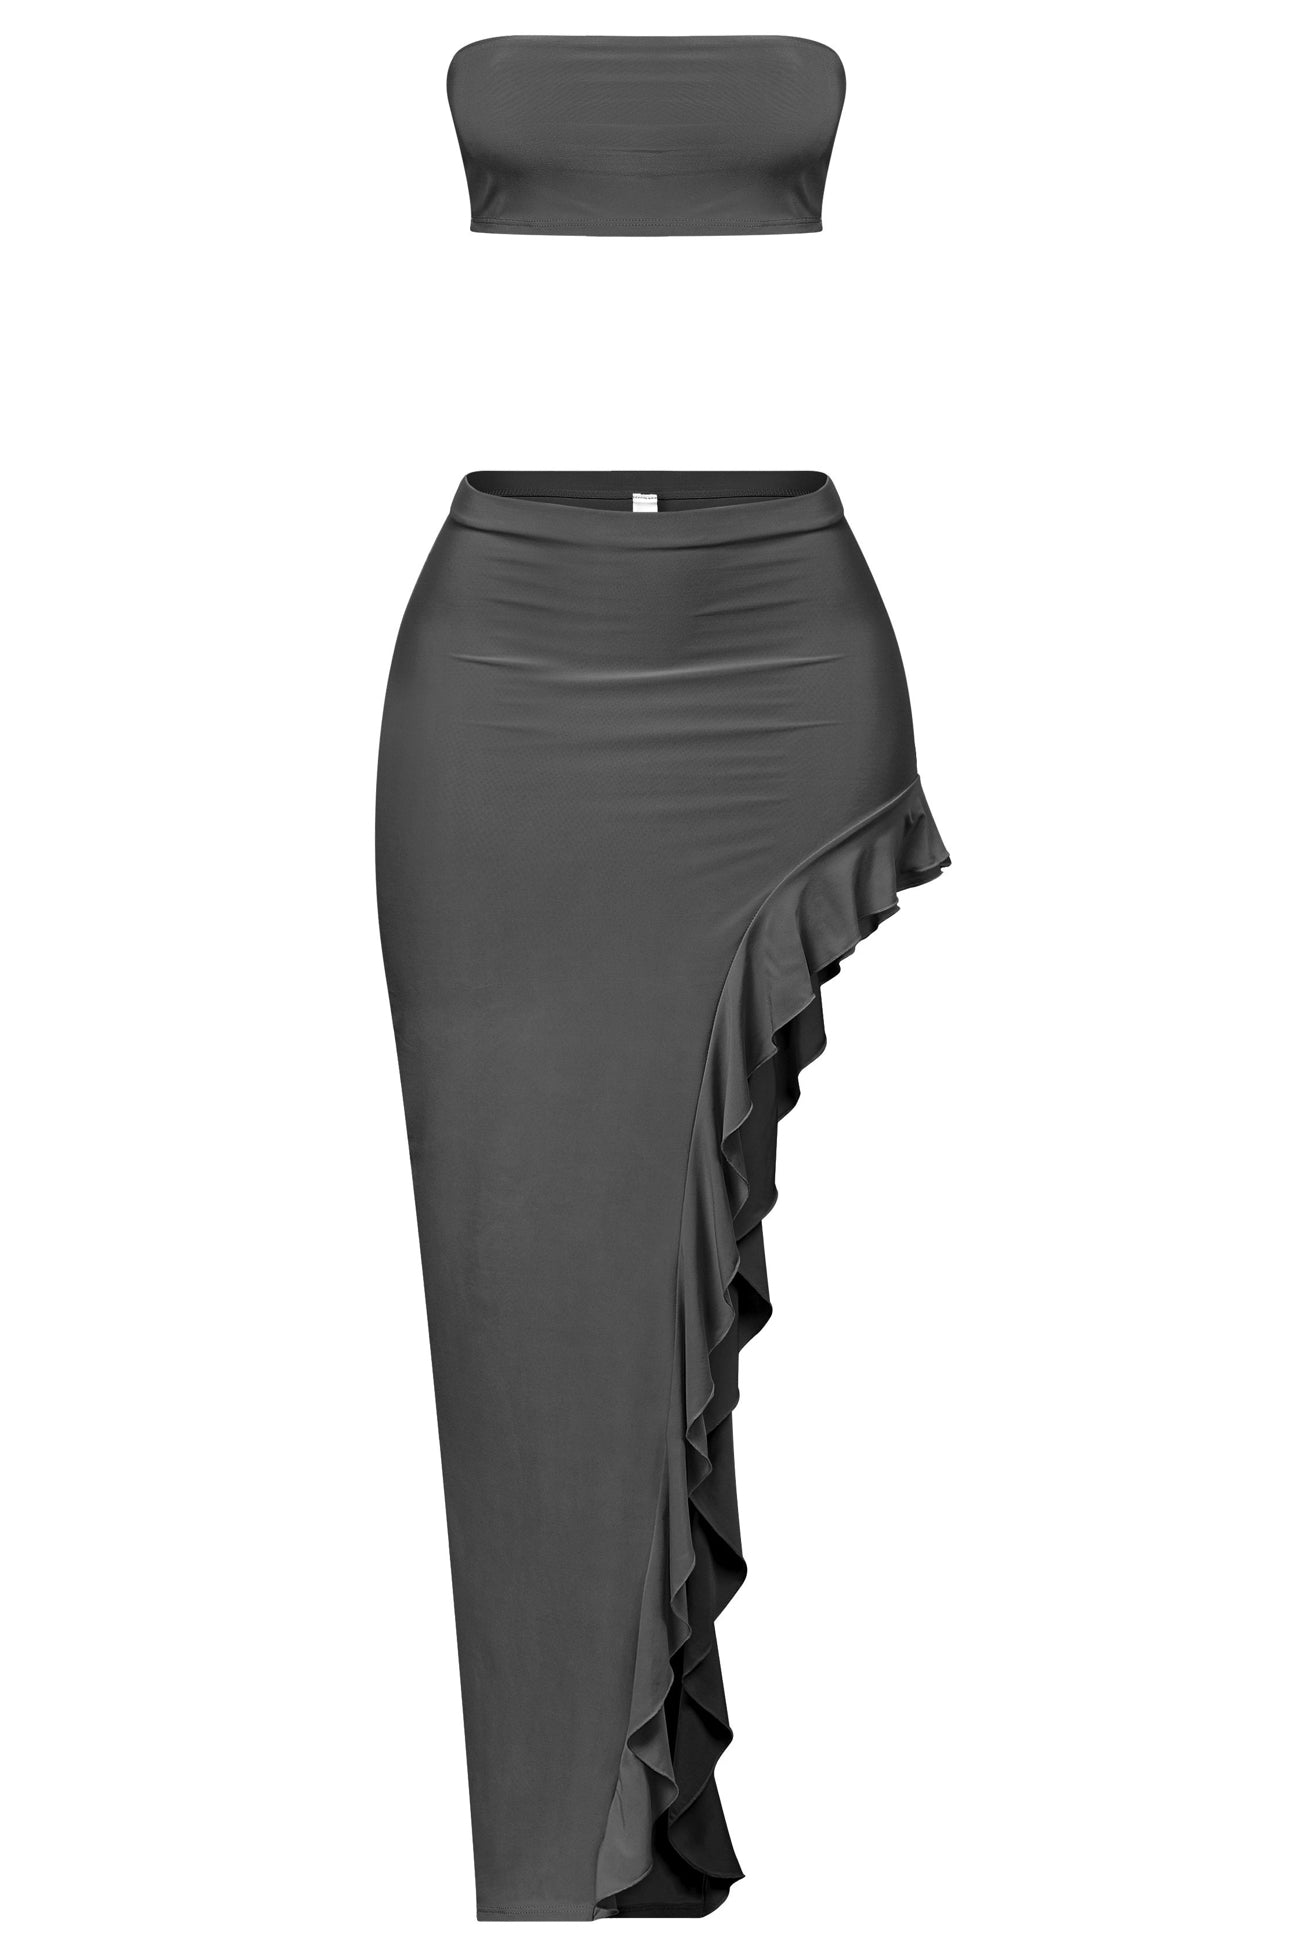 Naylea Ruffled Skirt Set (Black)